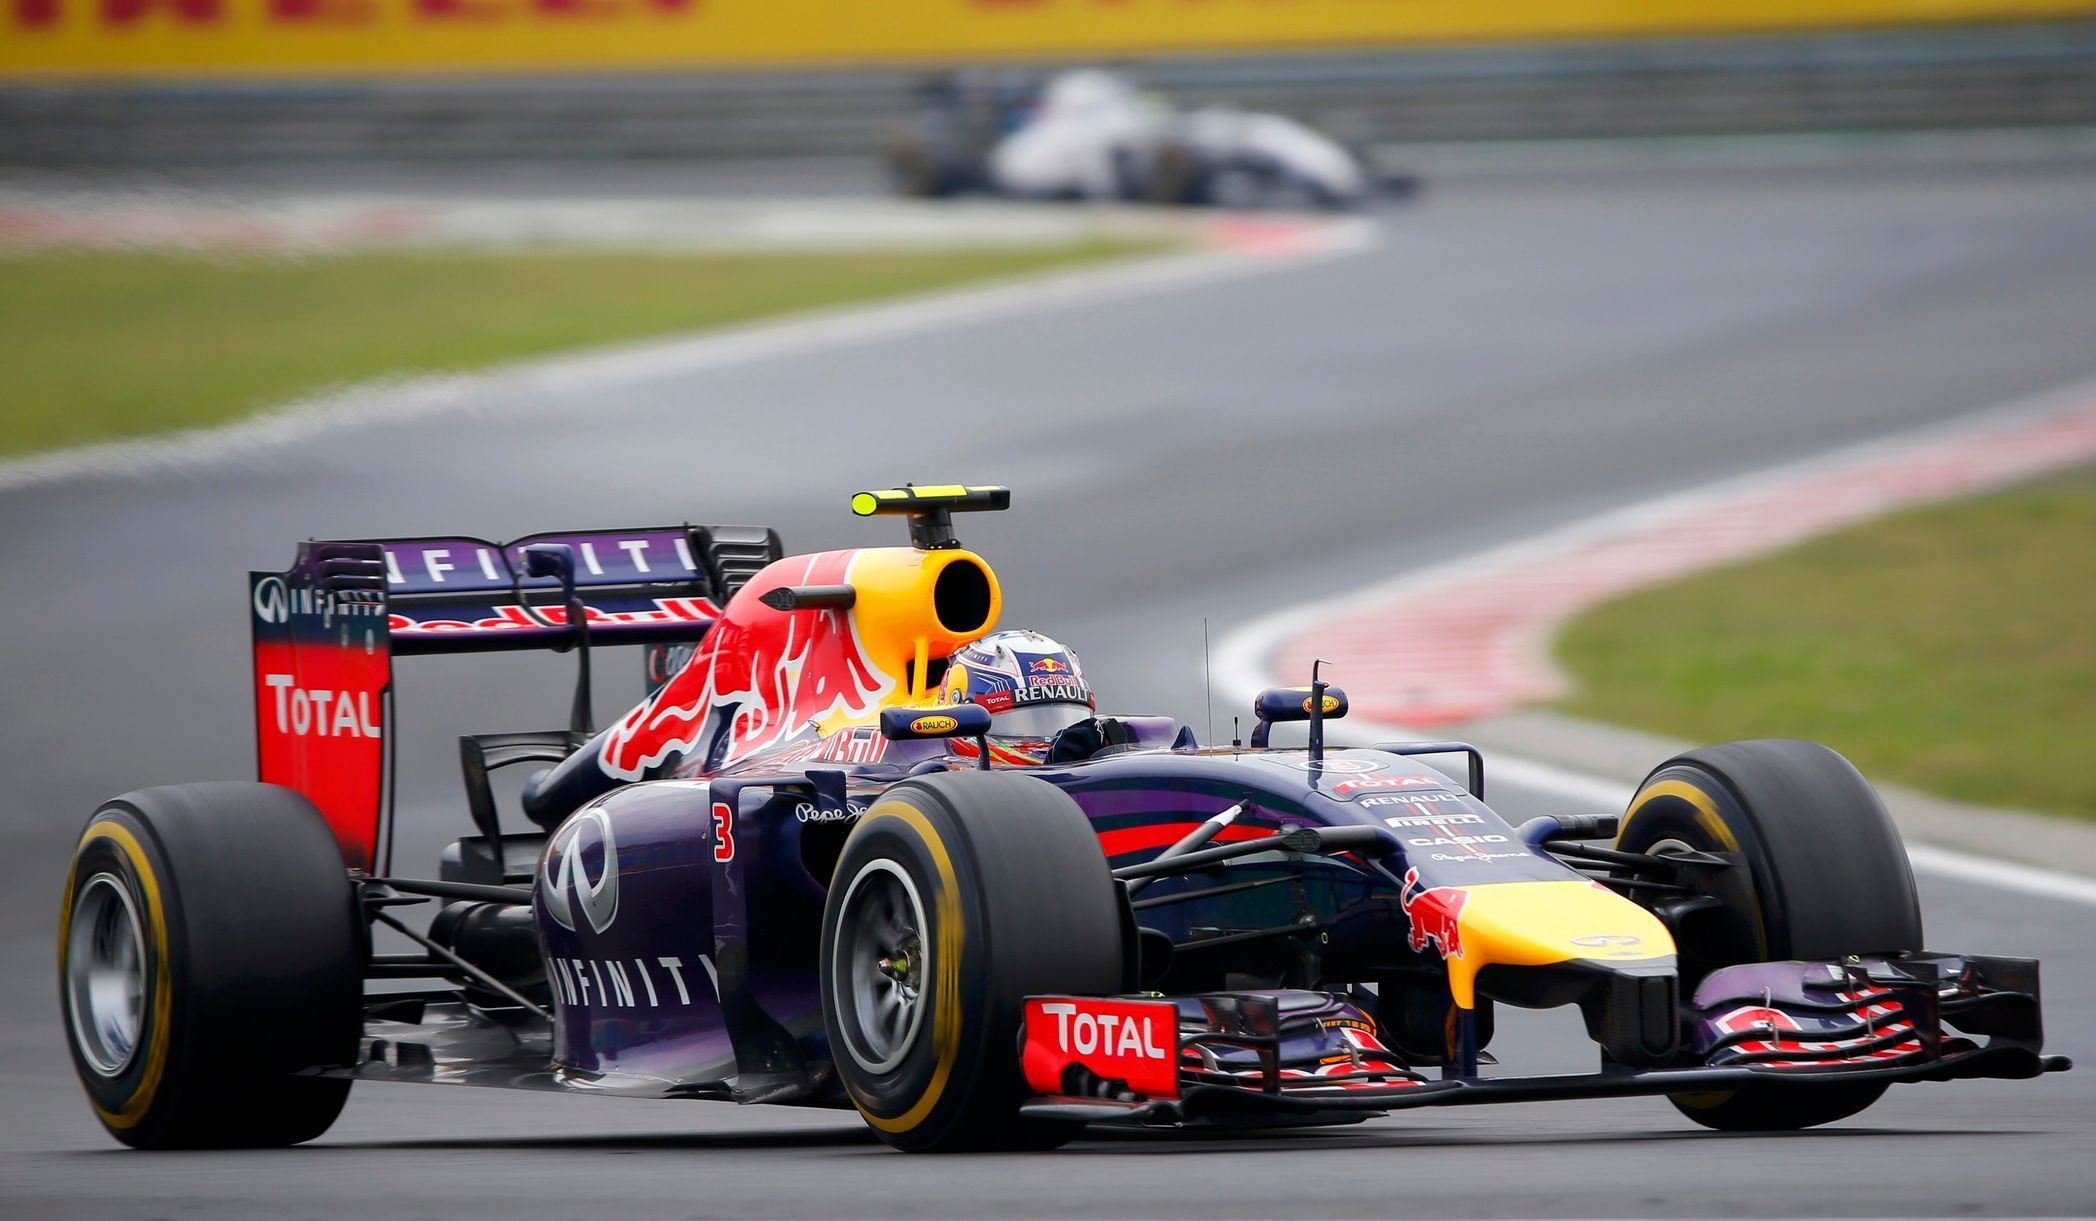 Red Bull Formula One driver Ricciardo of Australia drives during the Hungarian F1 Grand Prix at the Hungaroring circuit, near Budapest